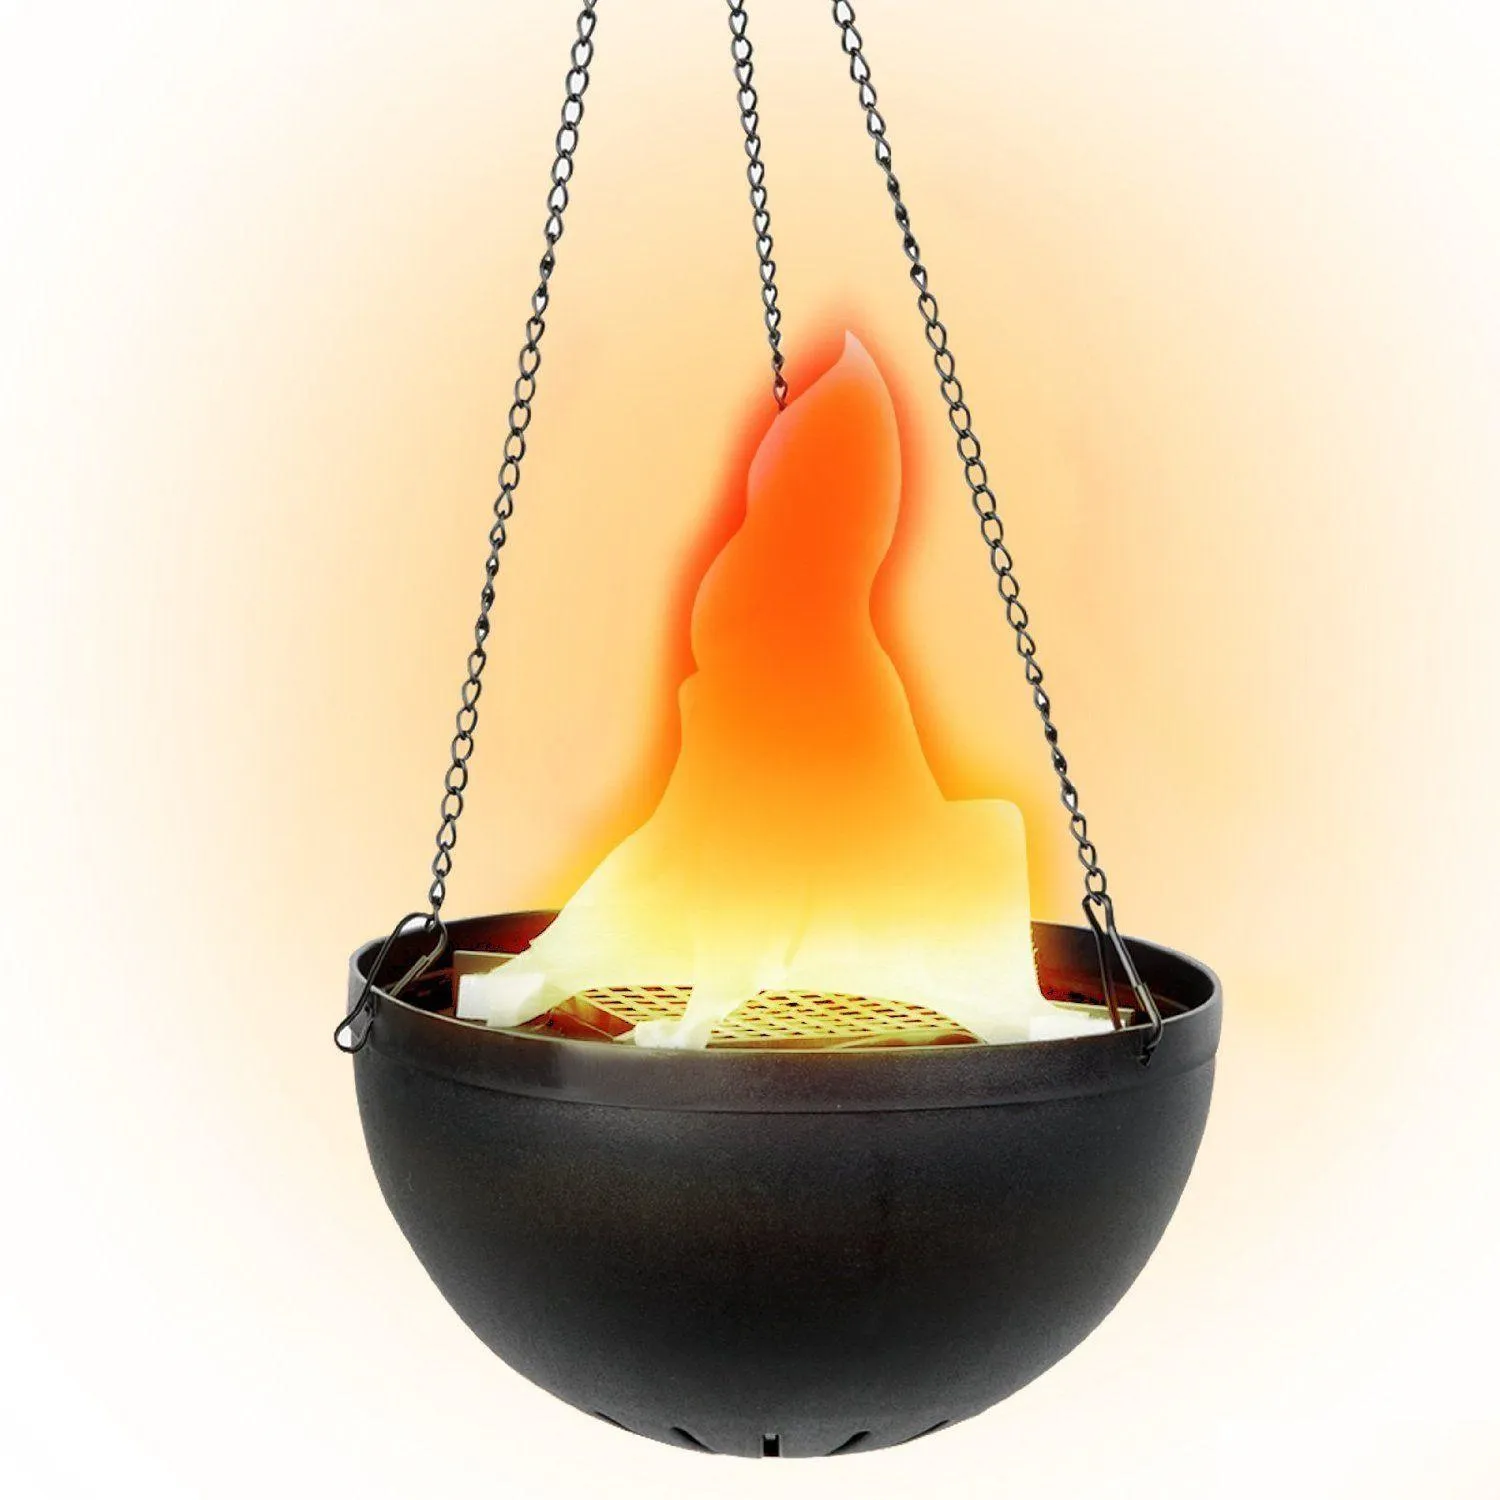 Annan scenbelysning Fake Fire Flame Light Hanging Bowl Style Led Electric Brazier Lamp för julfestdekorationer med realistiska DHFWD